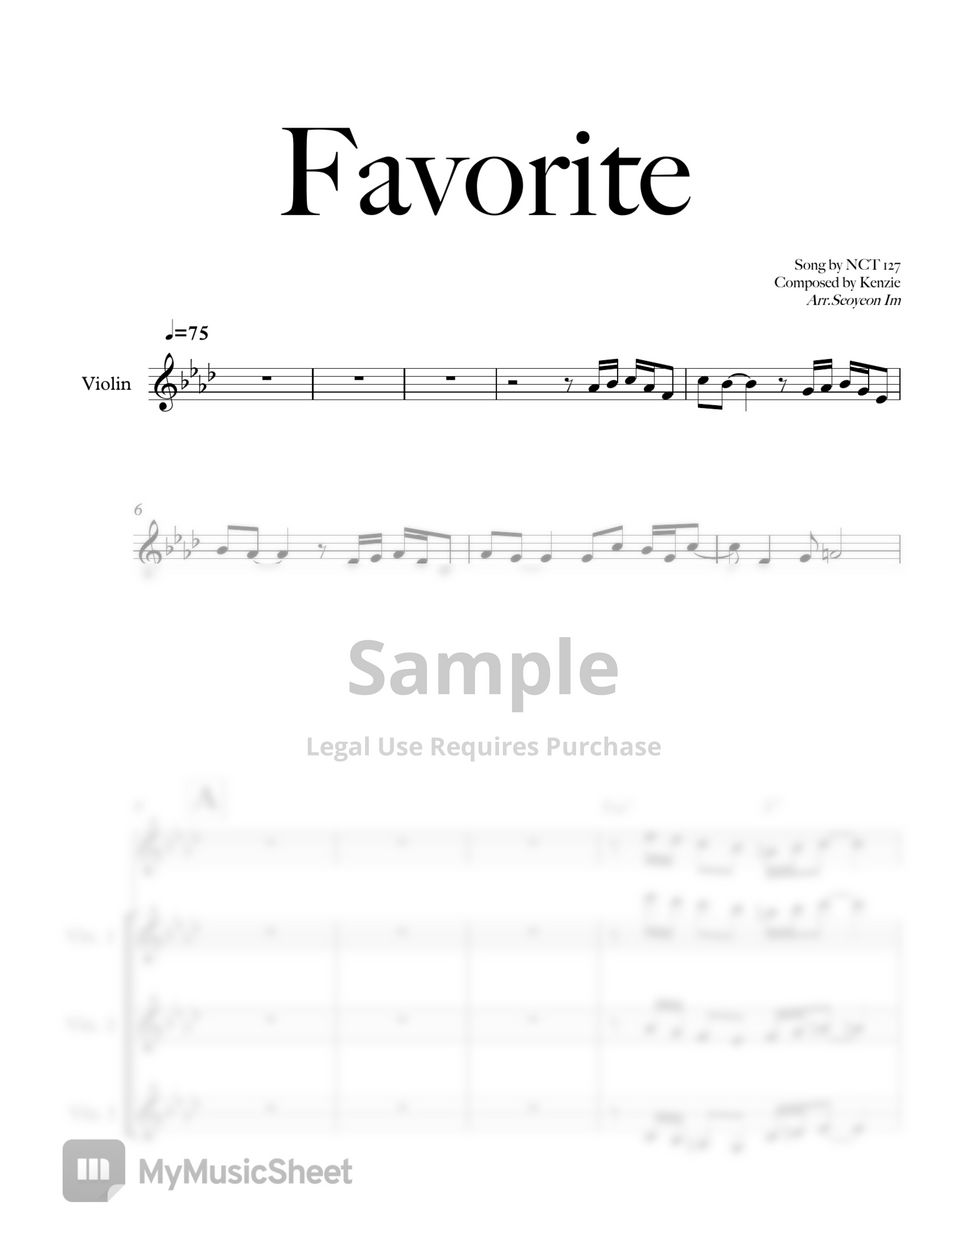 NCT 127 - Favorite (Violin/String Orchestra ver) by V.OLIN